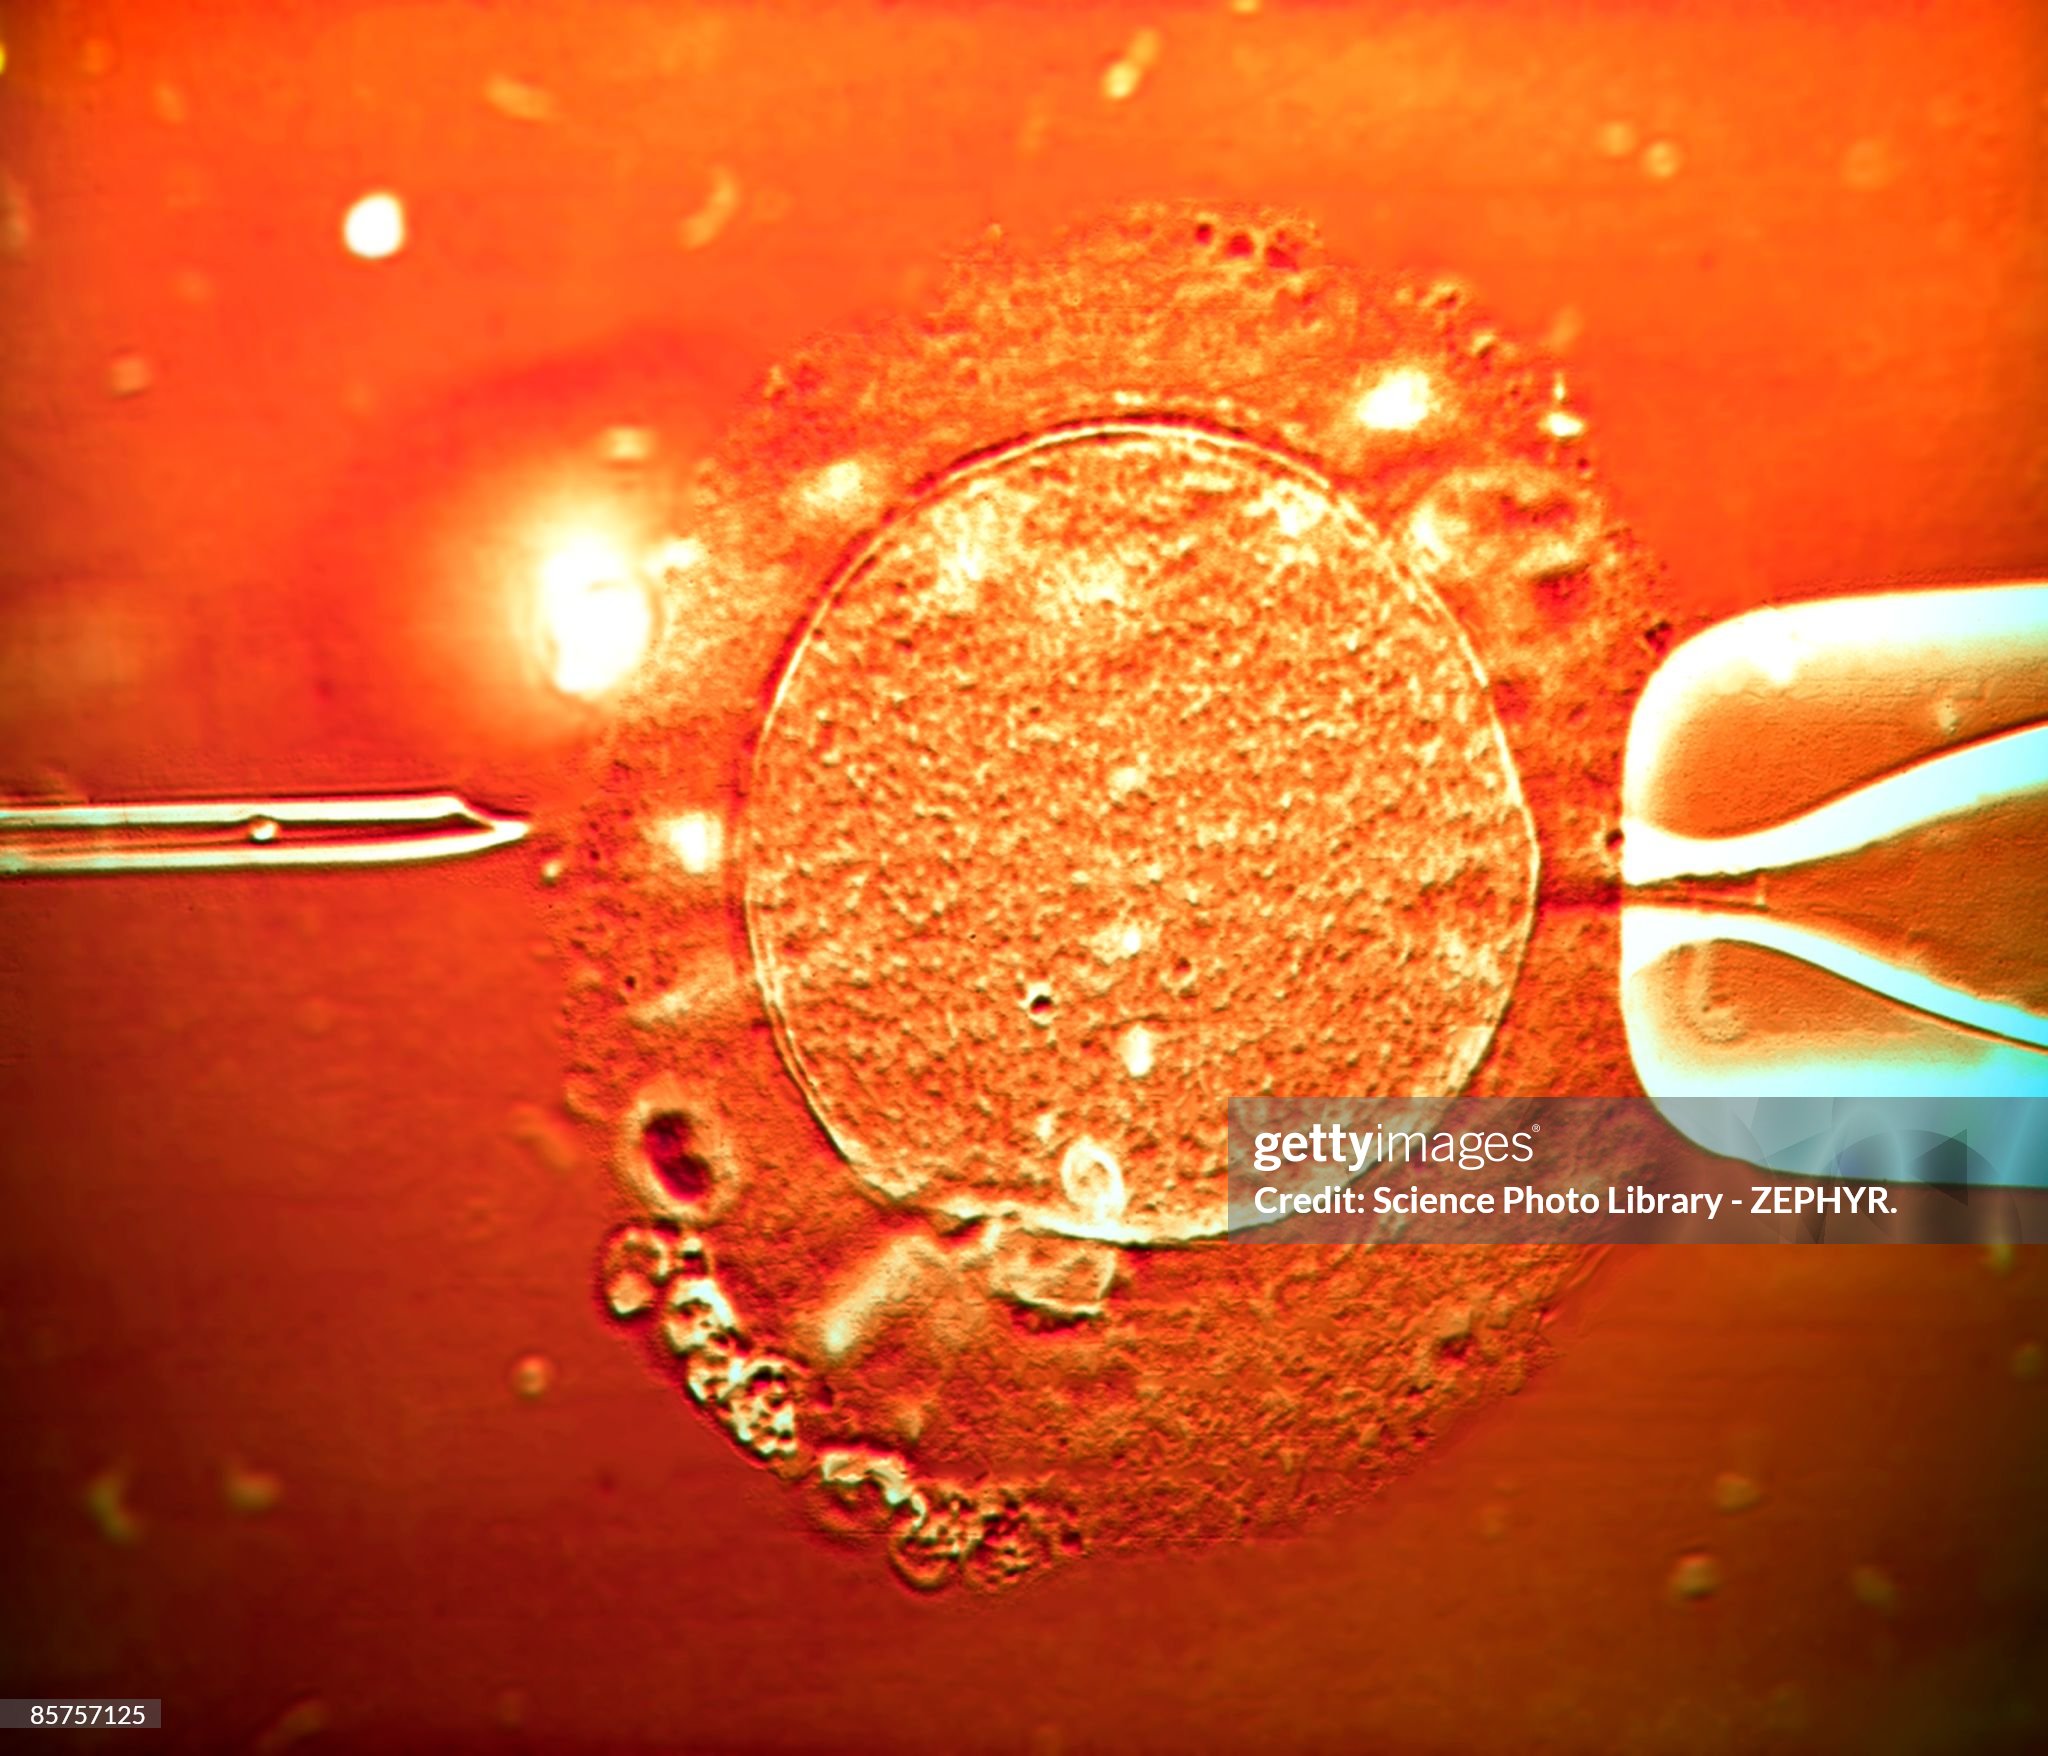 Alabama Declares War on In vitro fertilization